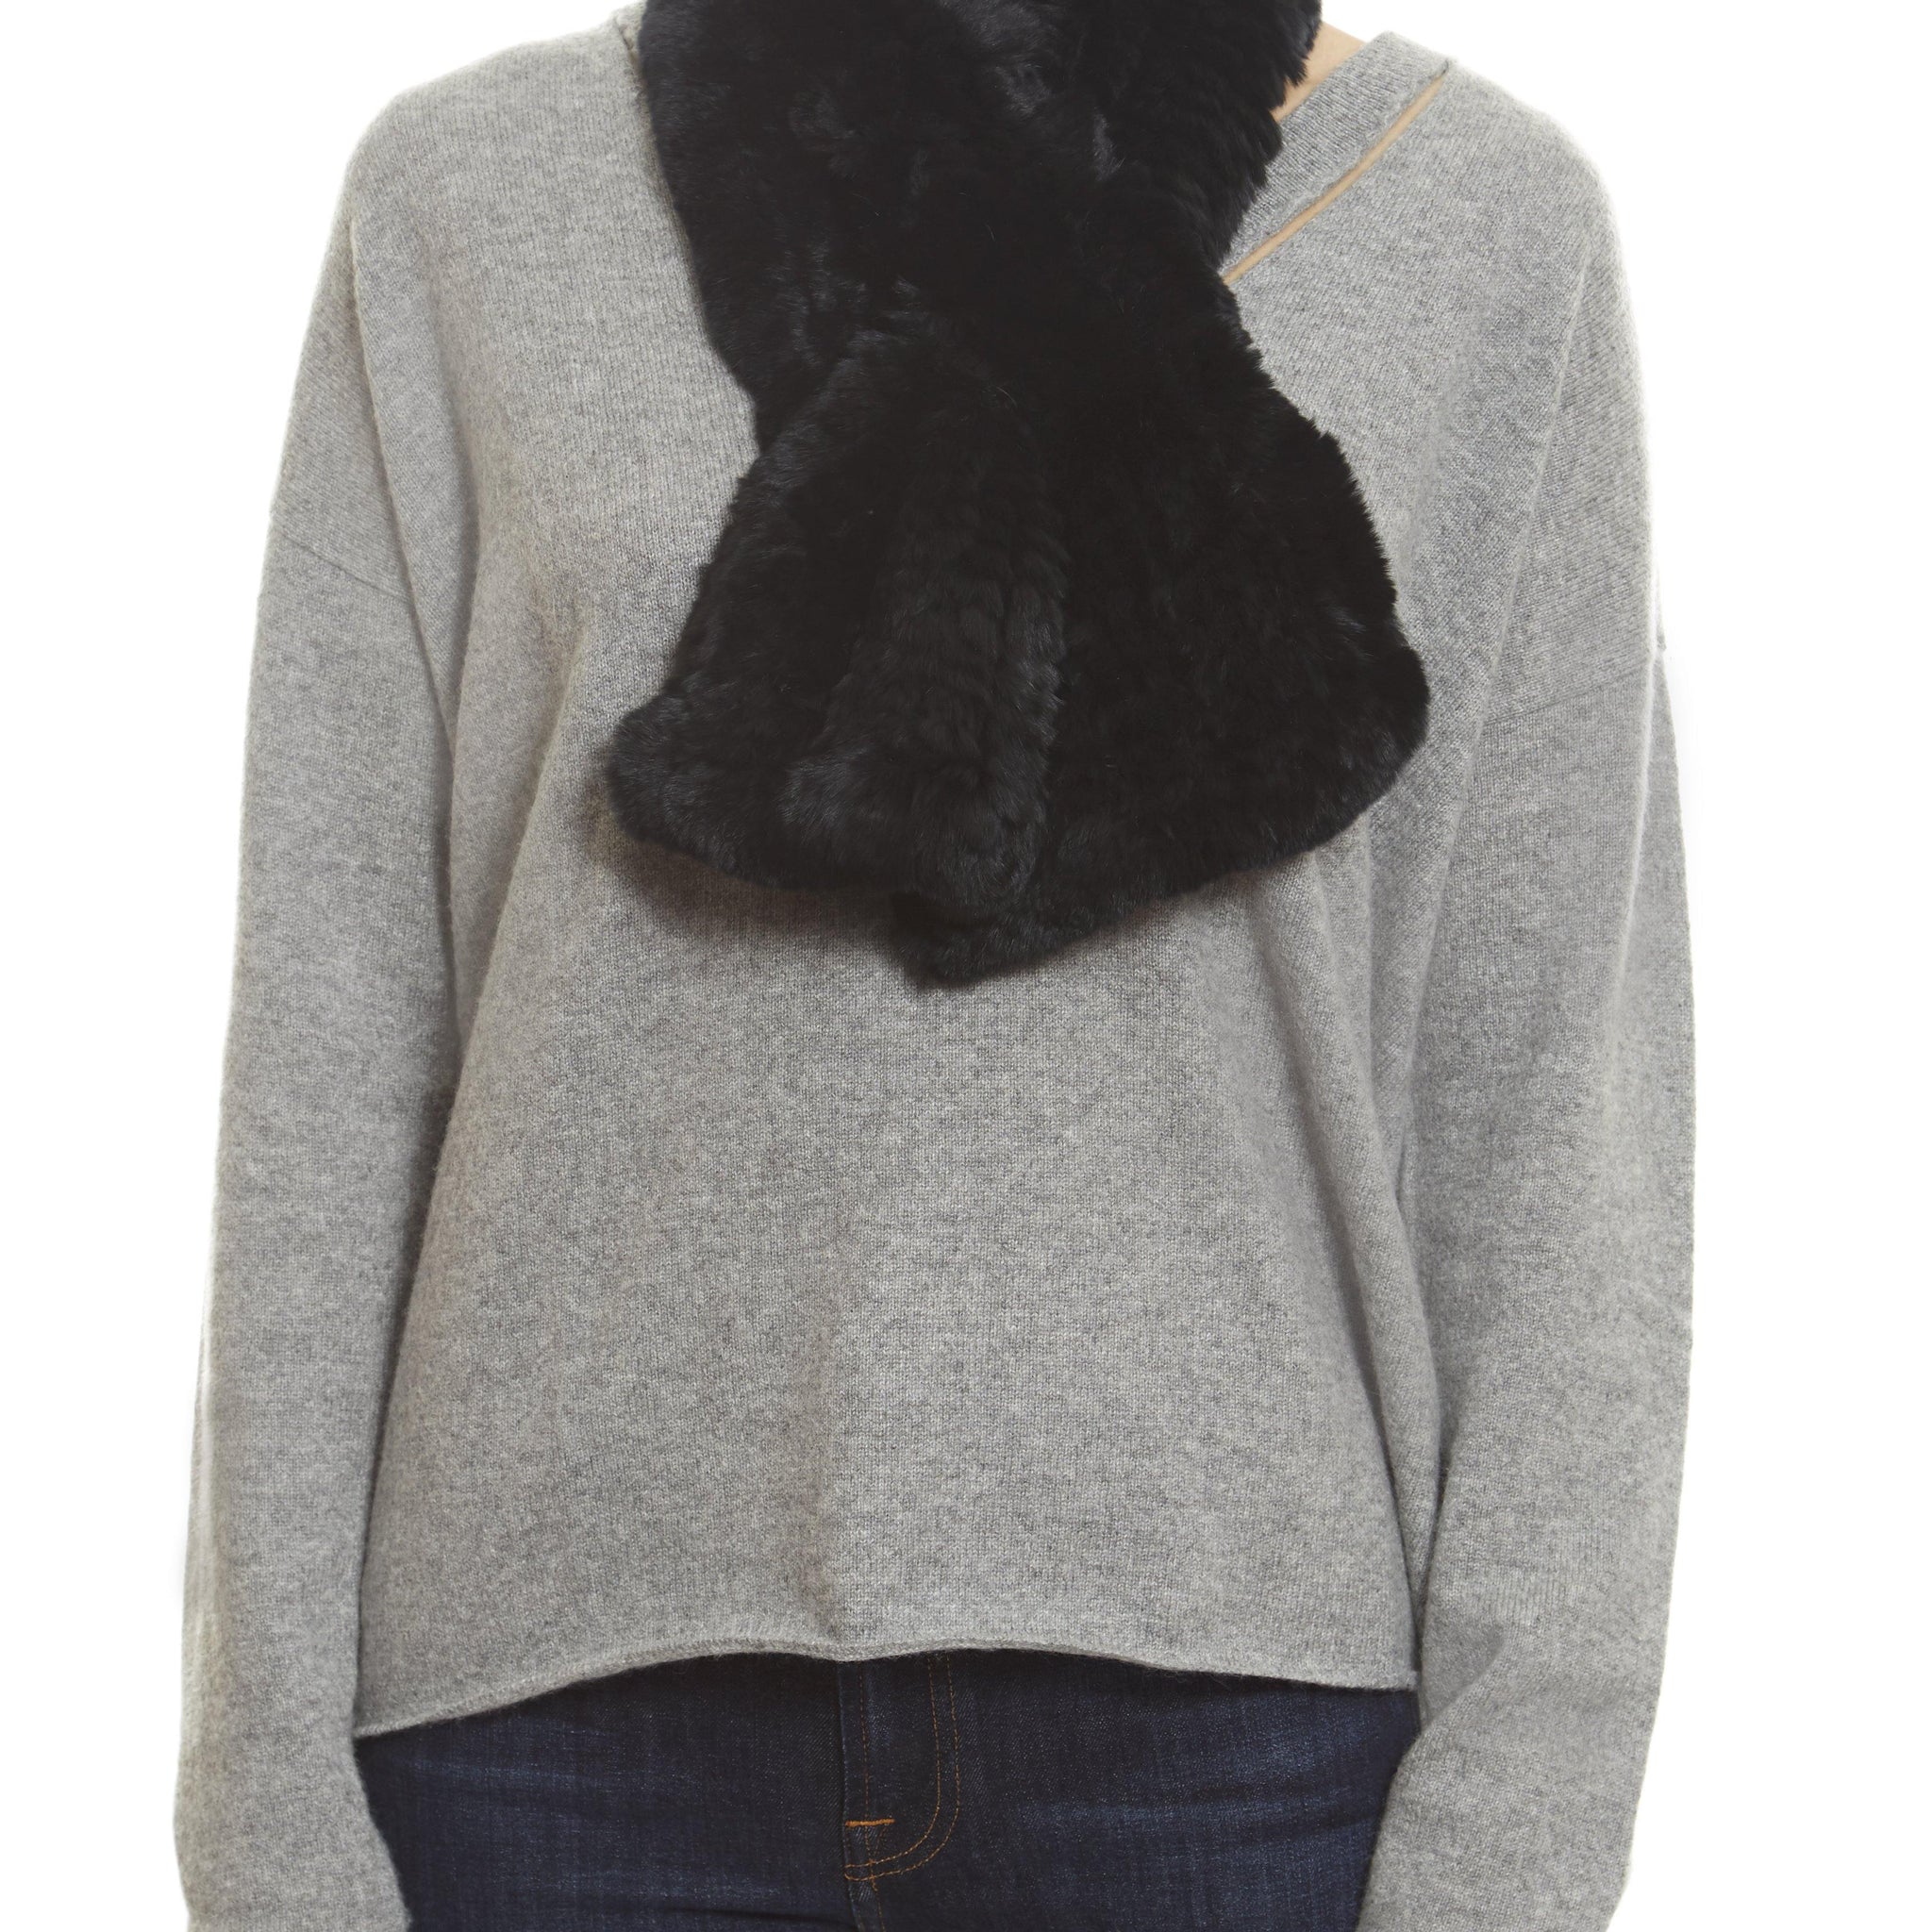 Black Knitted Rex Rabbit 'Loop' Luxury Fur Scarf - Jessimara